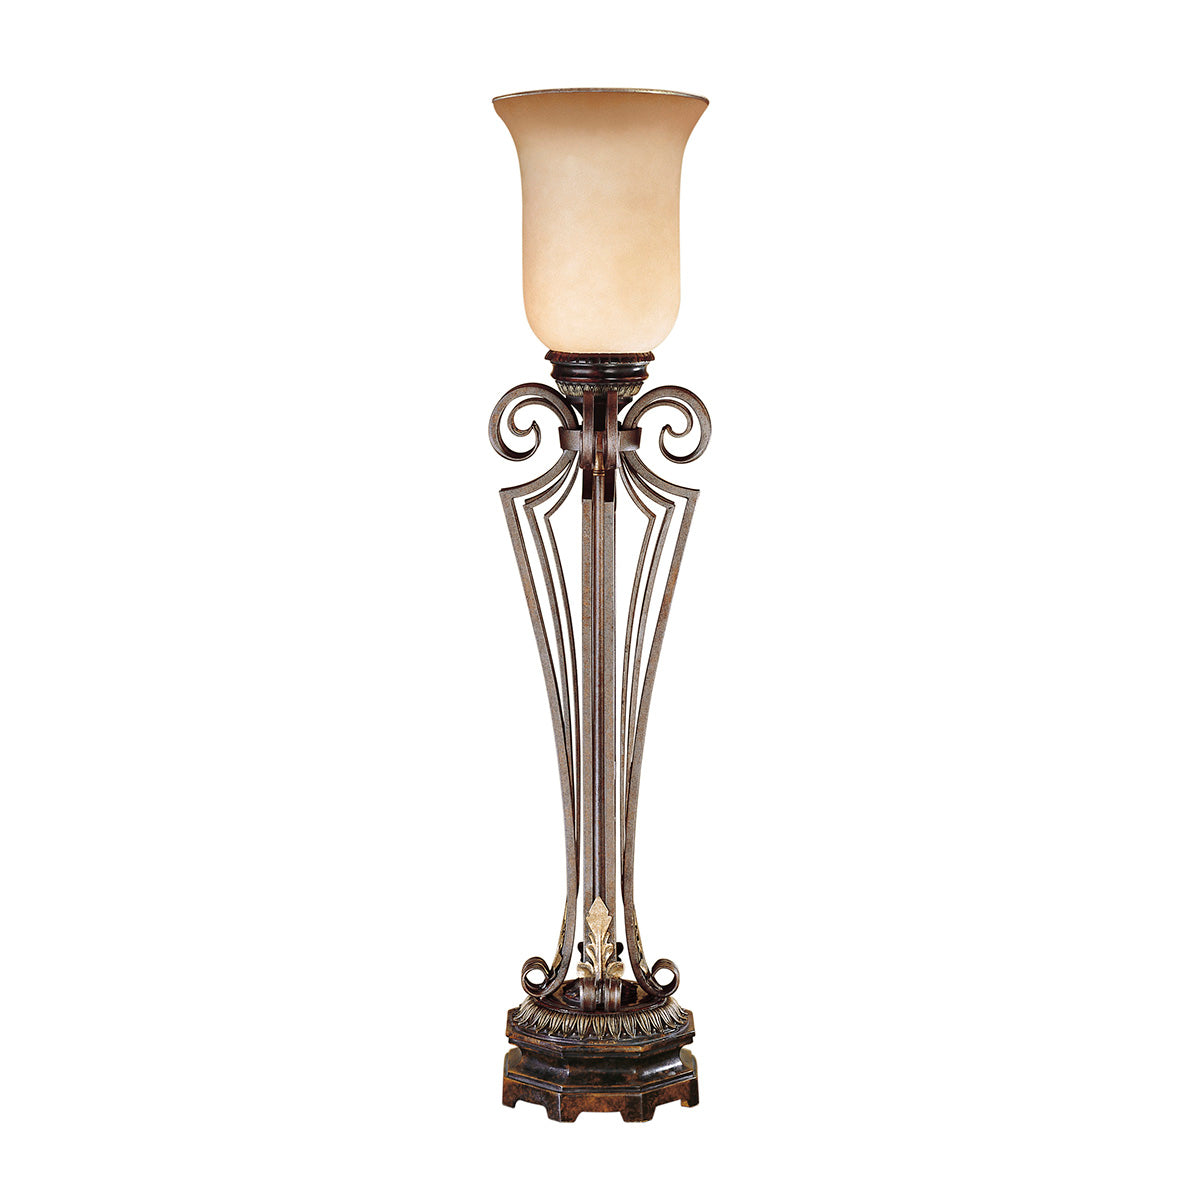 Corinthia 1 Light Table Lamp